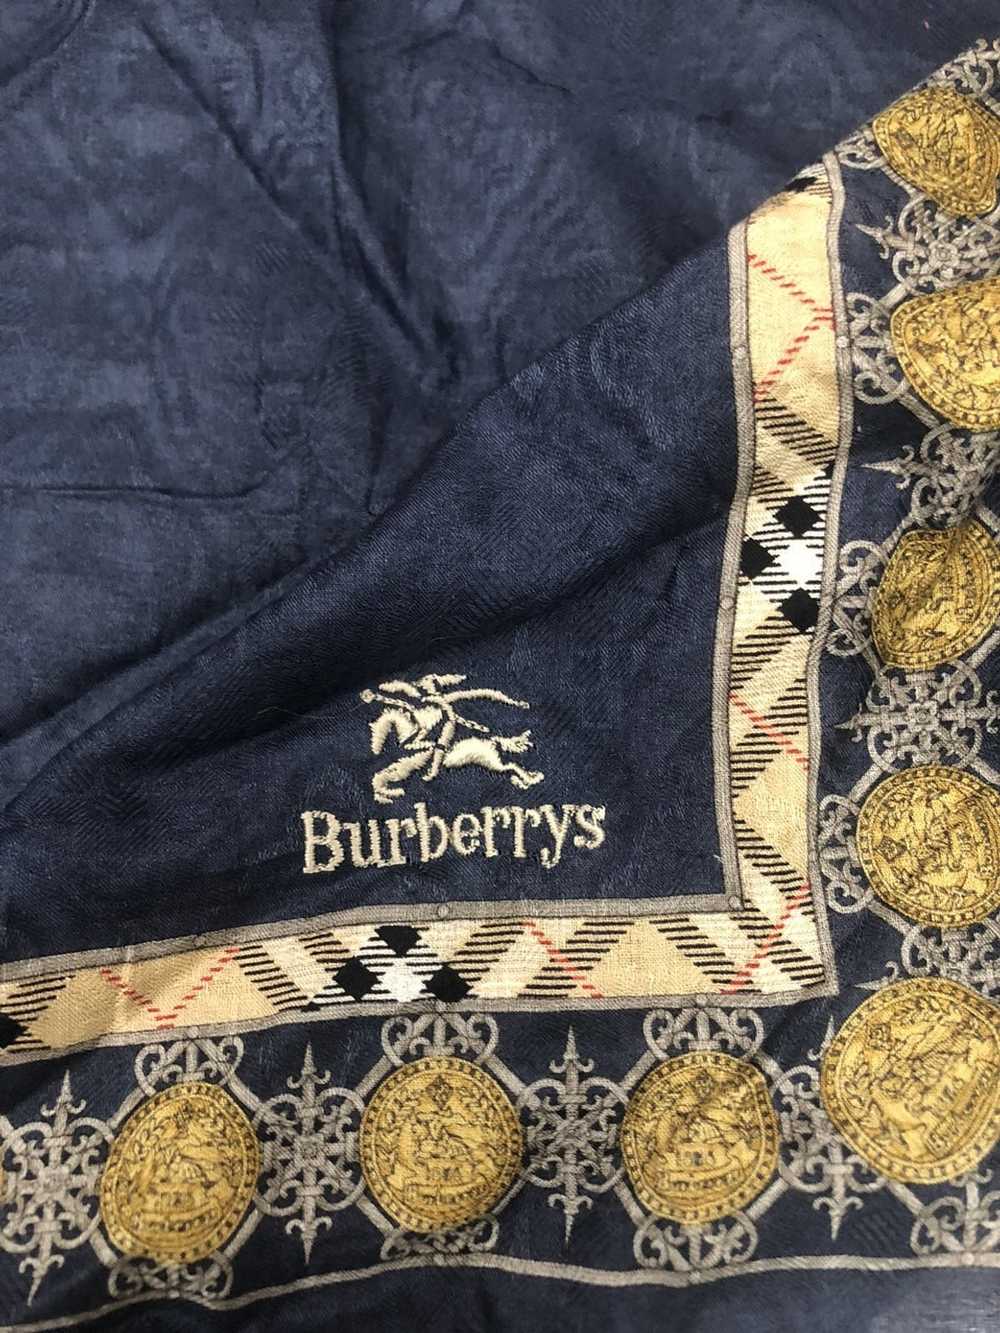 Burberry Vintage Burberrys handkerchief - image 2